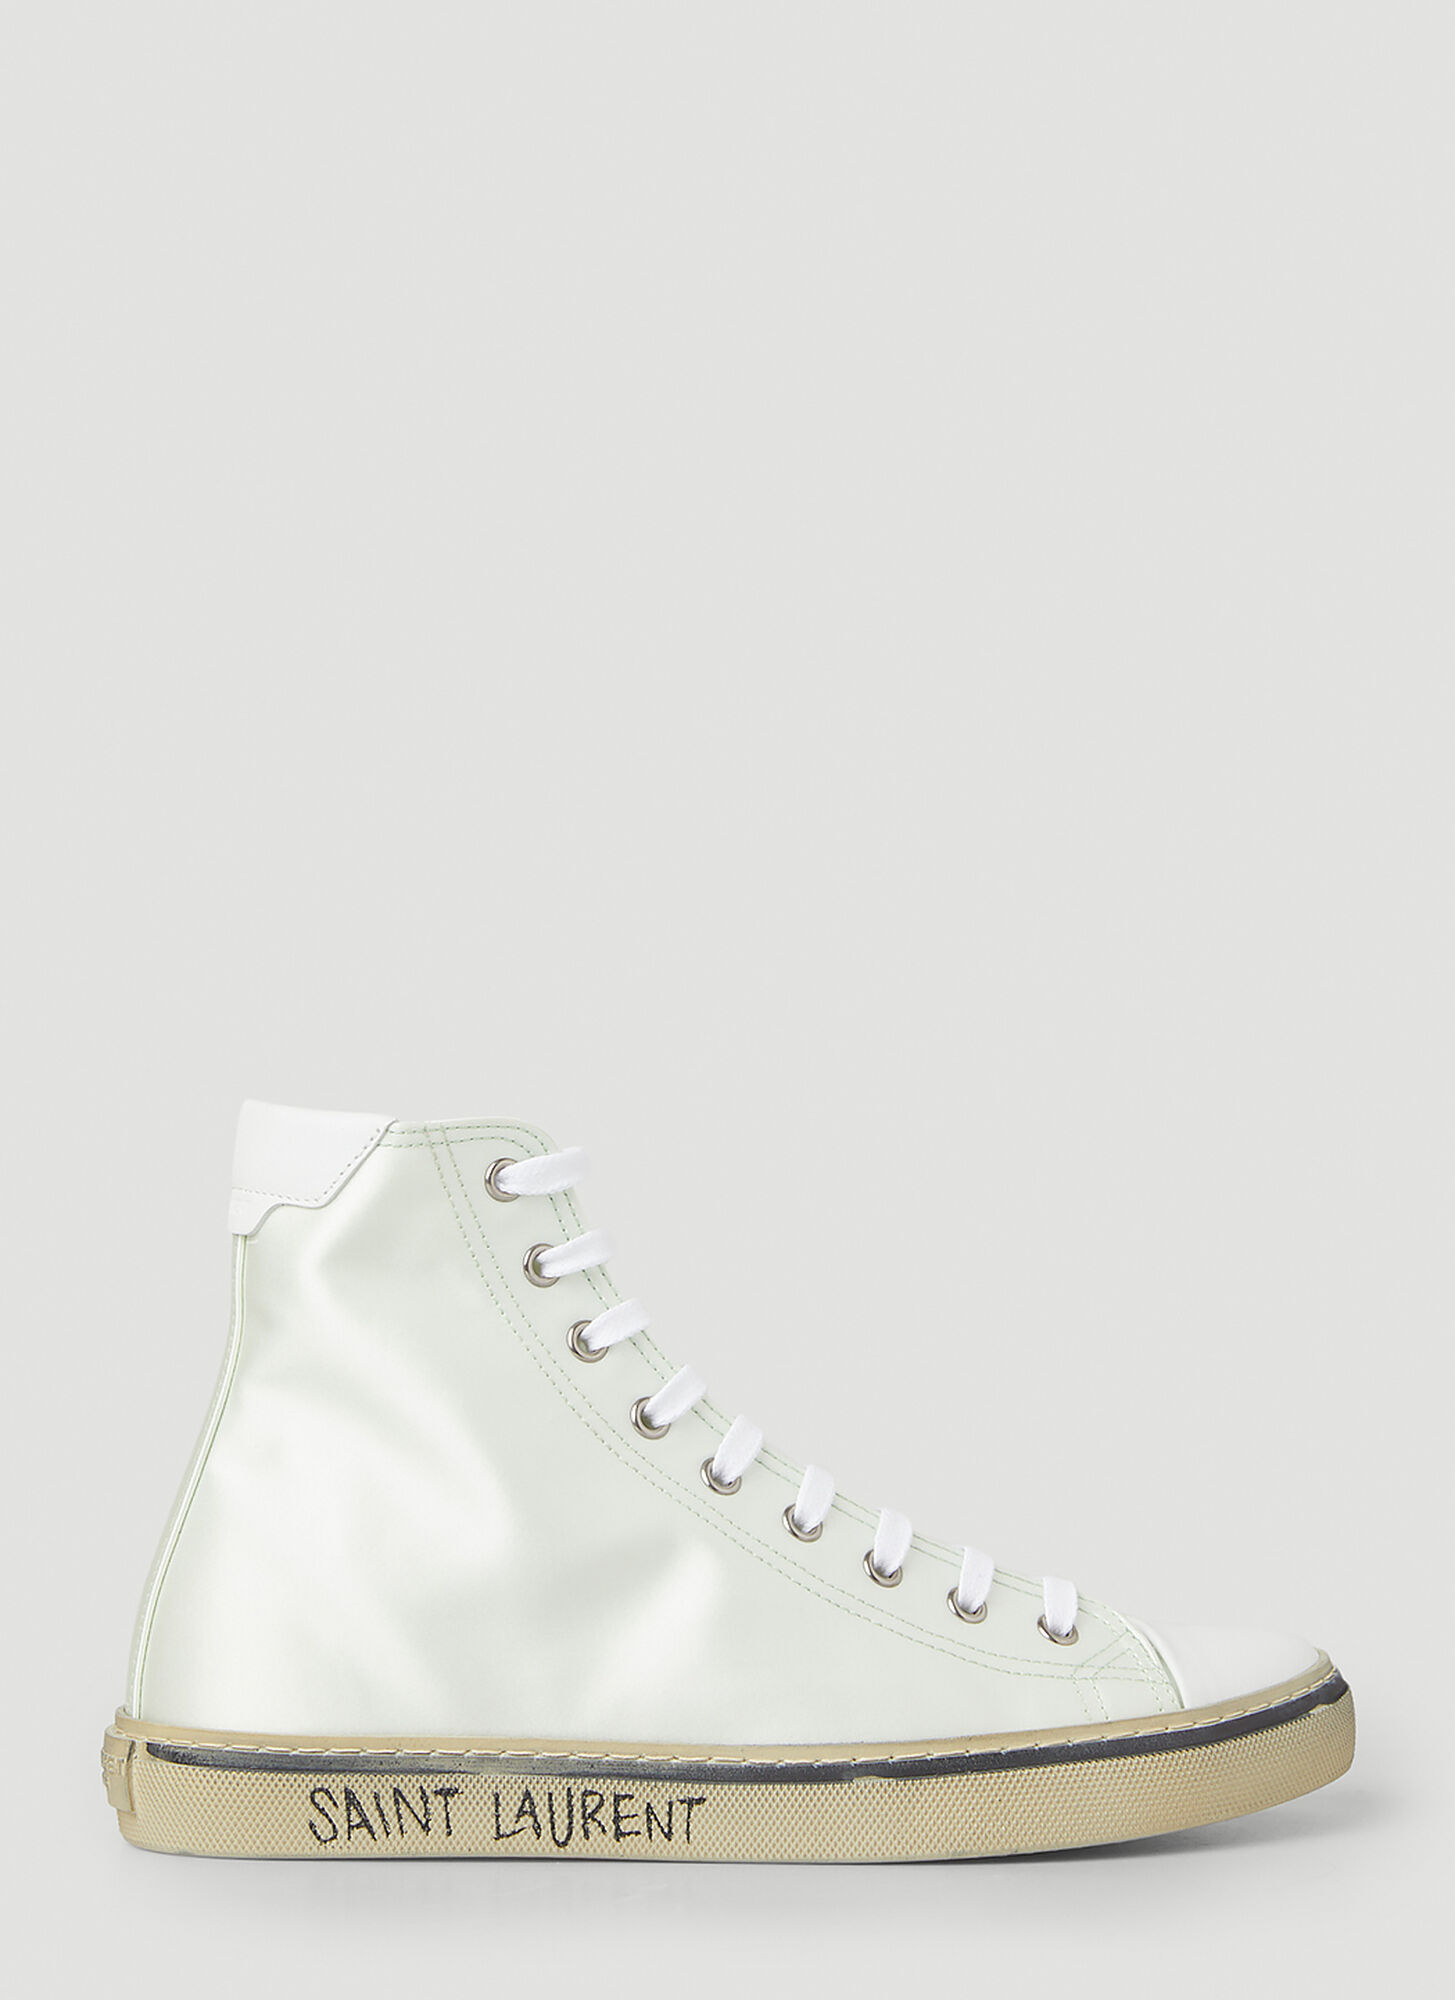 Saint Laurent Malibu Satin Sneakers Female White